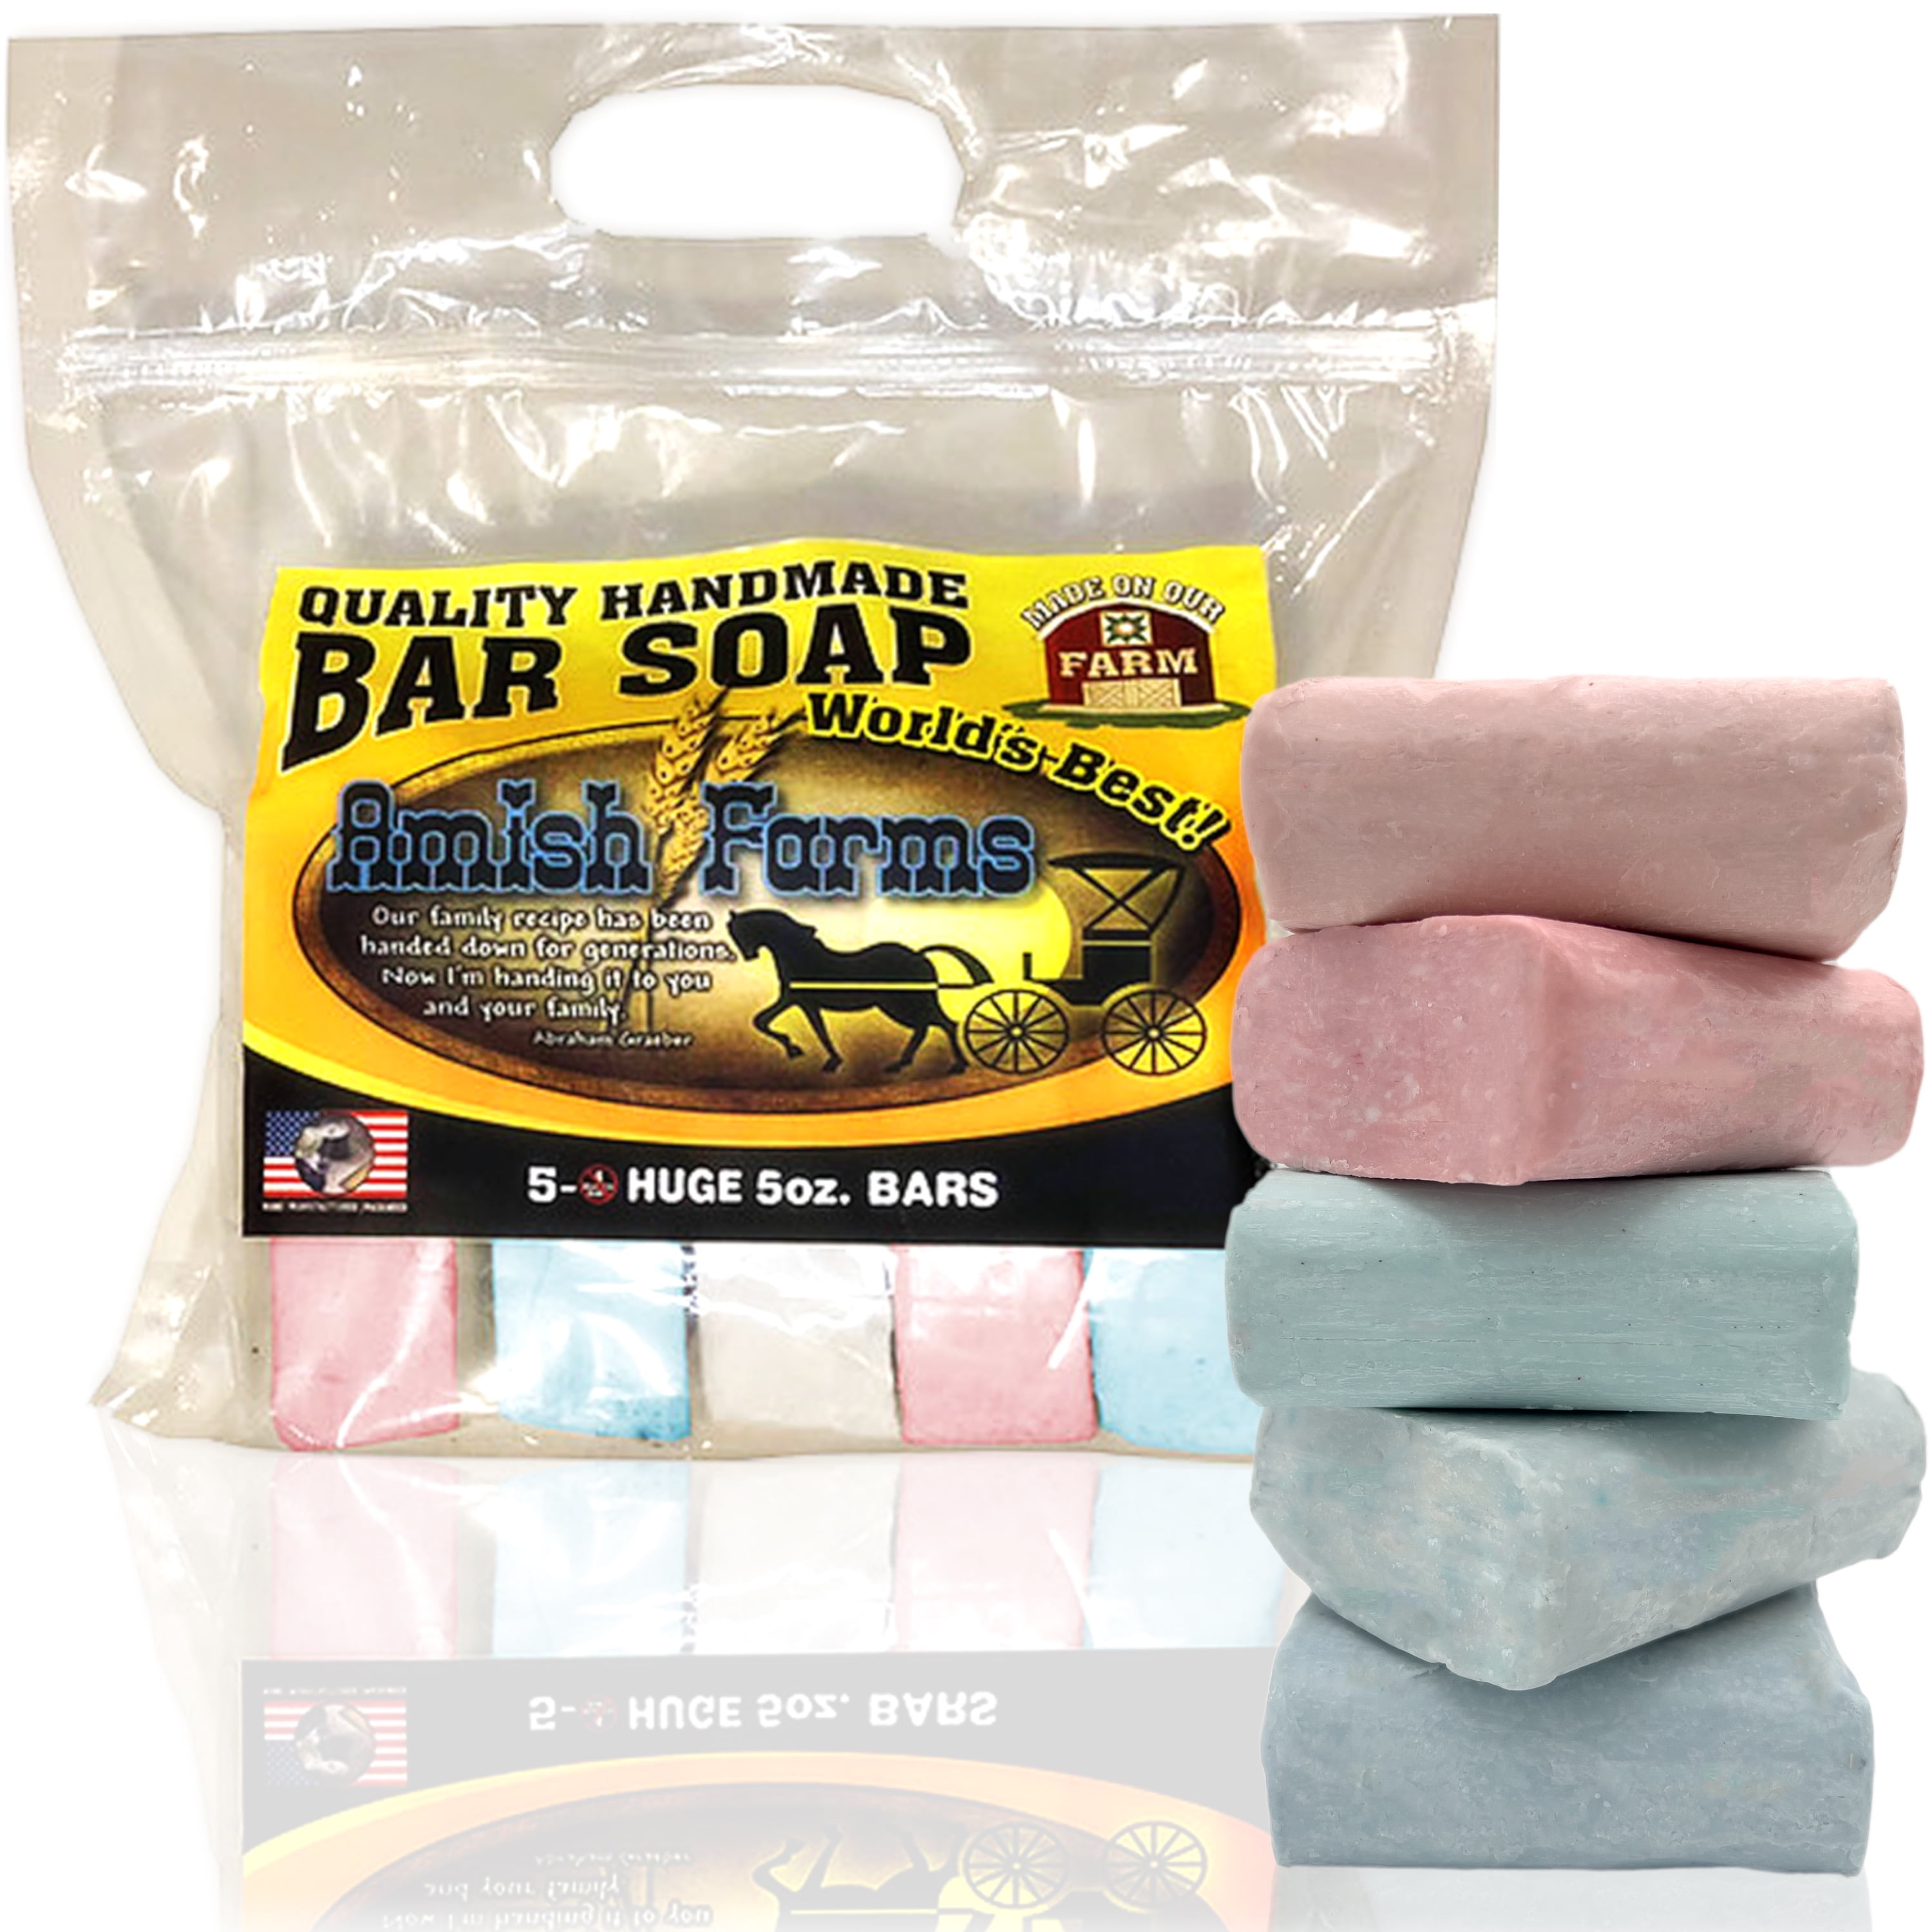  Amish Farms Fragrance-Free & Dye-Free Natural Bar Soap